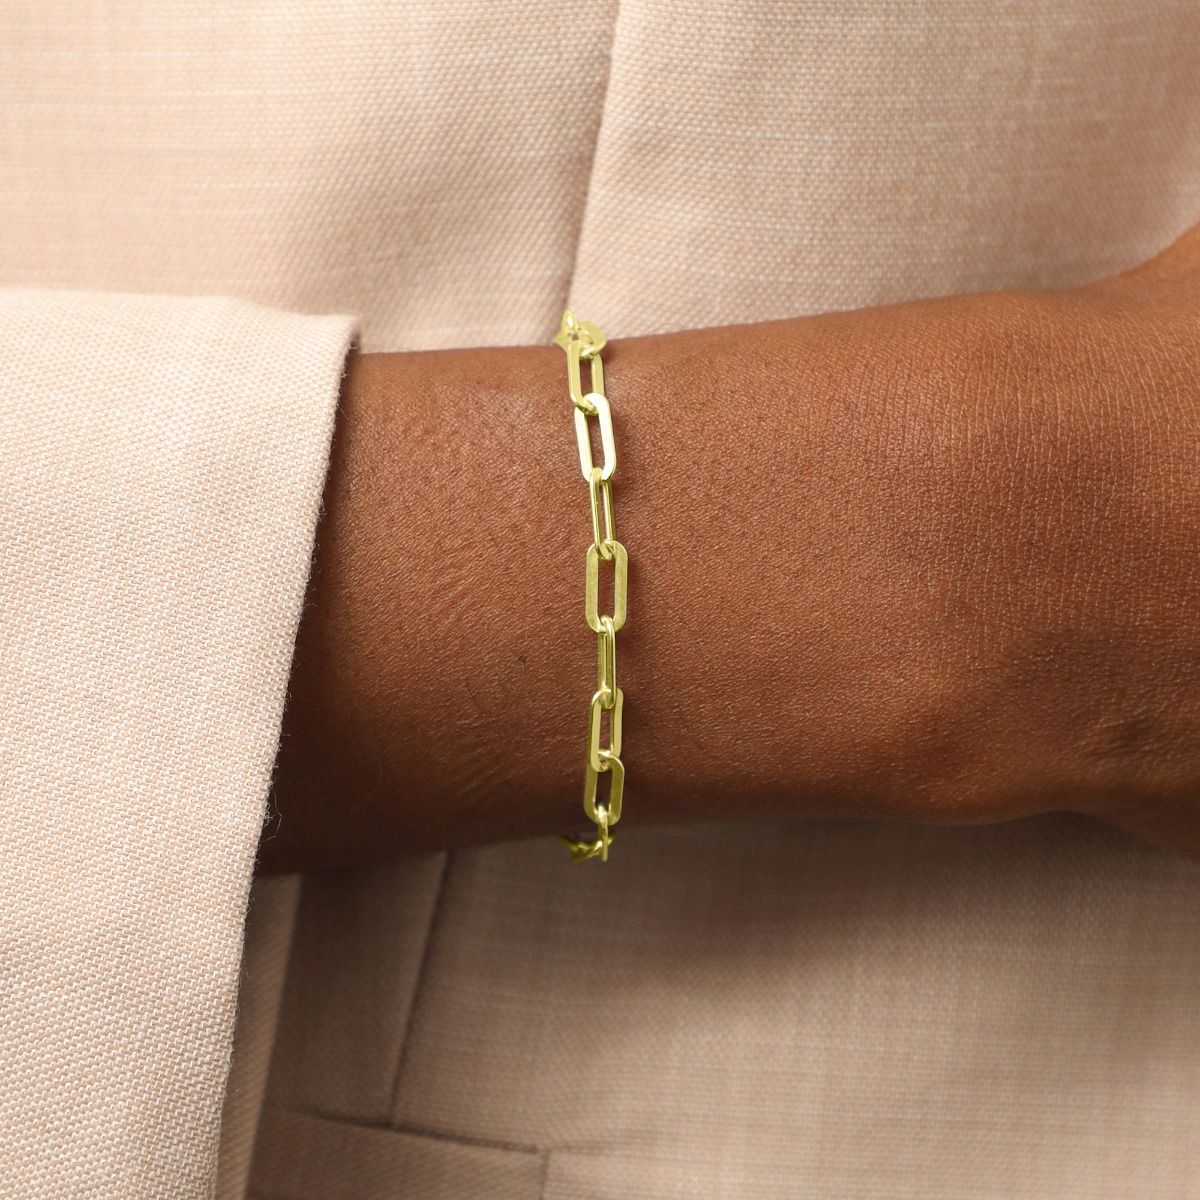 Flat Curb Chain Armband Sieraden Armbanden Schakelarmbanden Sierlijke gouden armbanden voor vrouwen 18k goud gevulde schakel ketting armband set Rechthoek Paper Clip Ketting Armbanden 